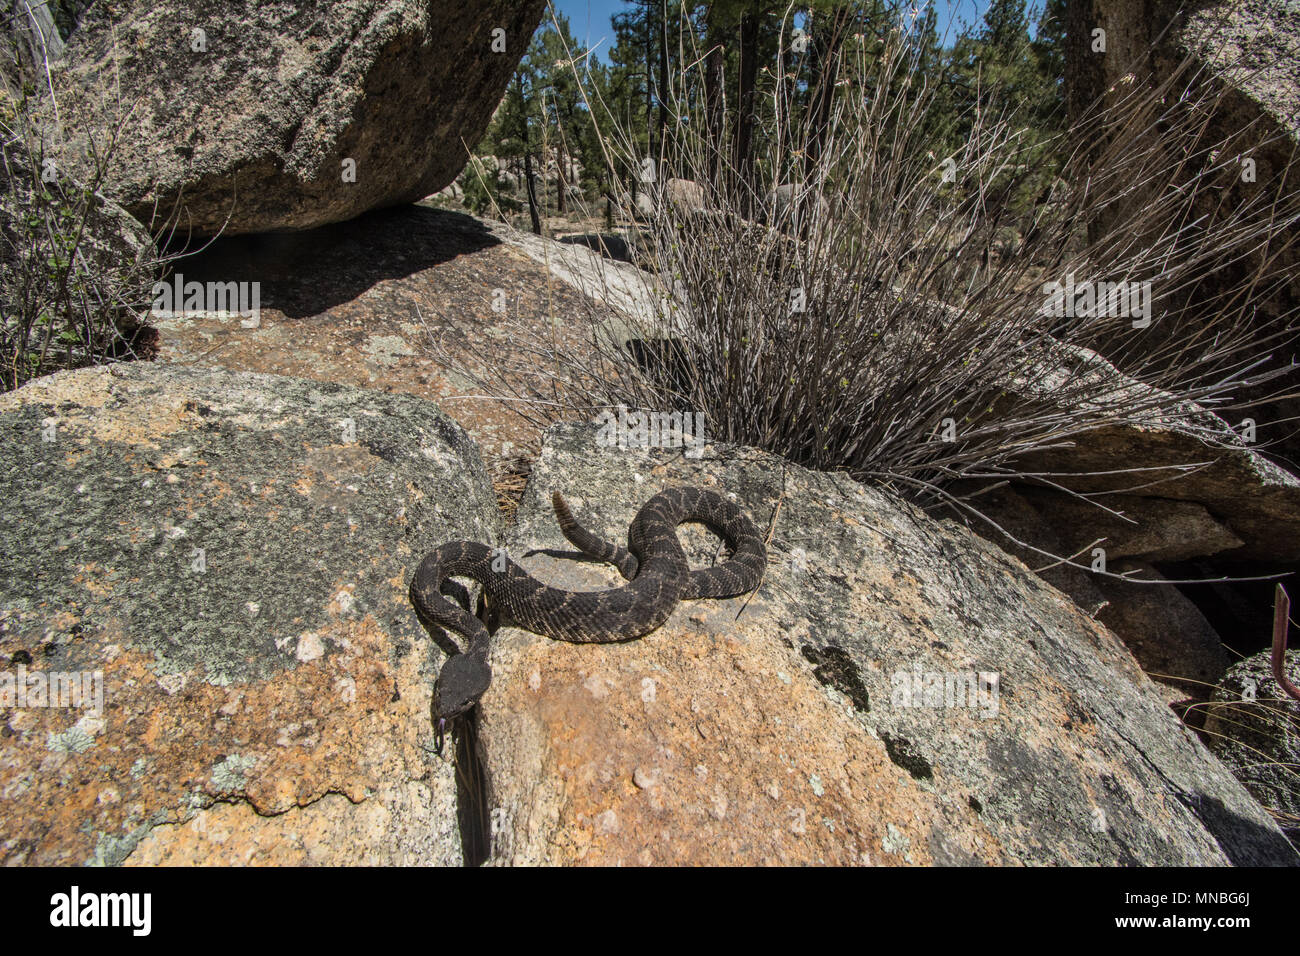 Southern Pacific Rattlesnake (Crotalus oreganus helleri) from the Sierra Jurarez, Baja California, Mexico. Stock Photo